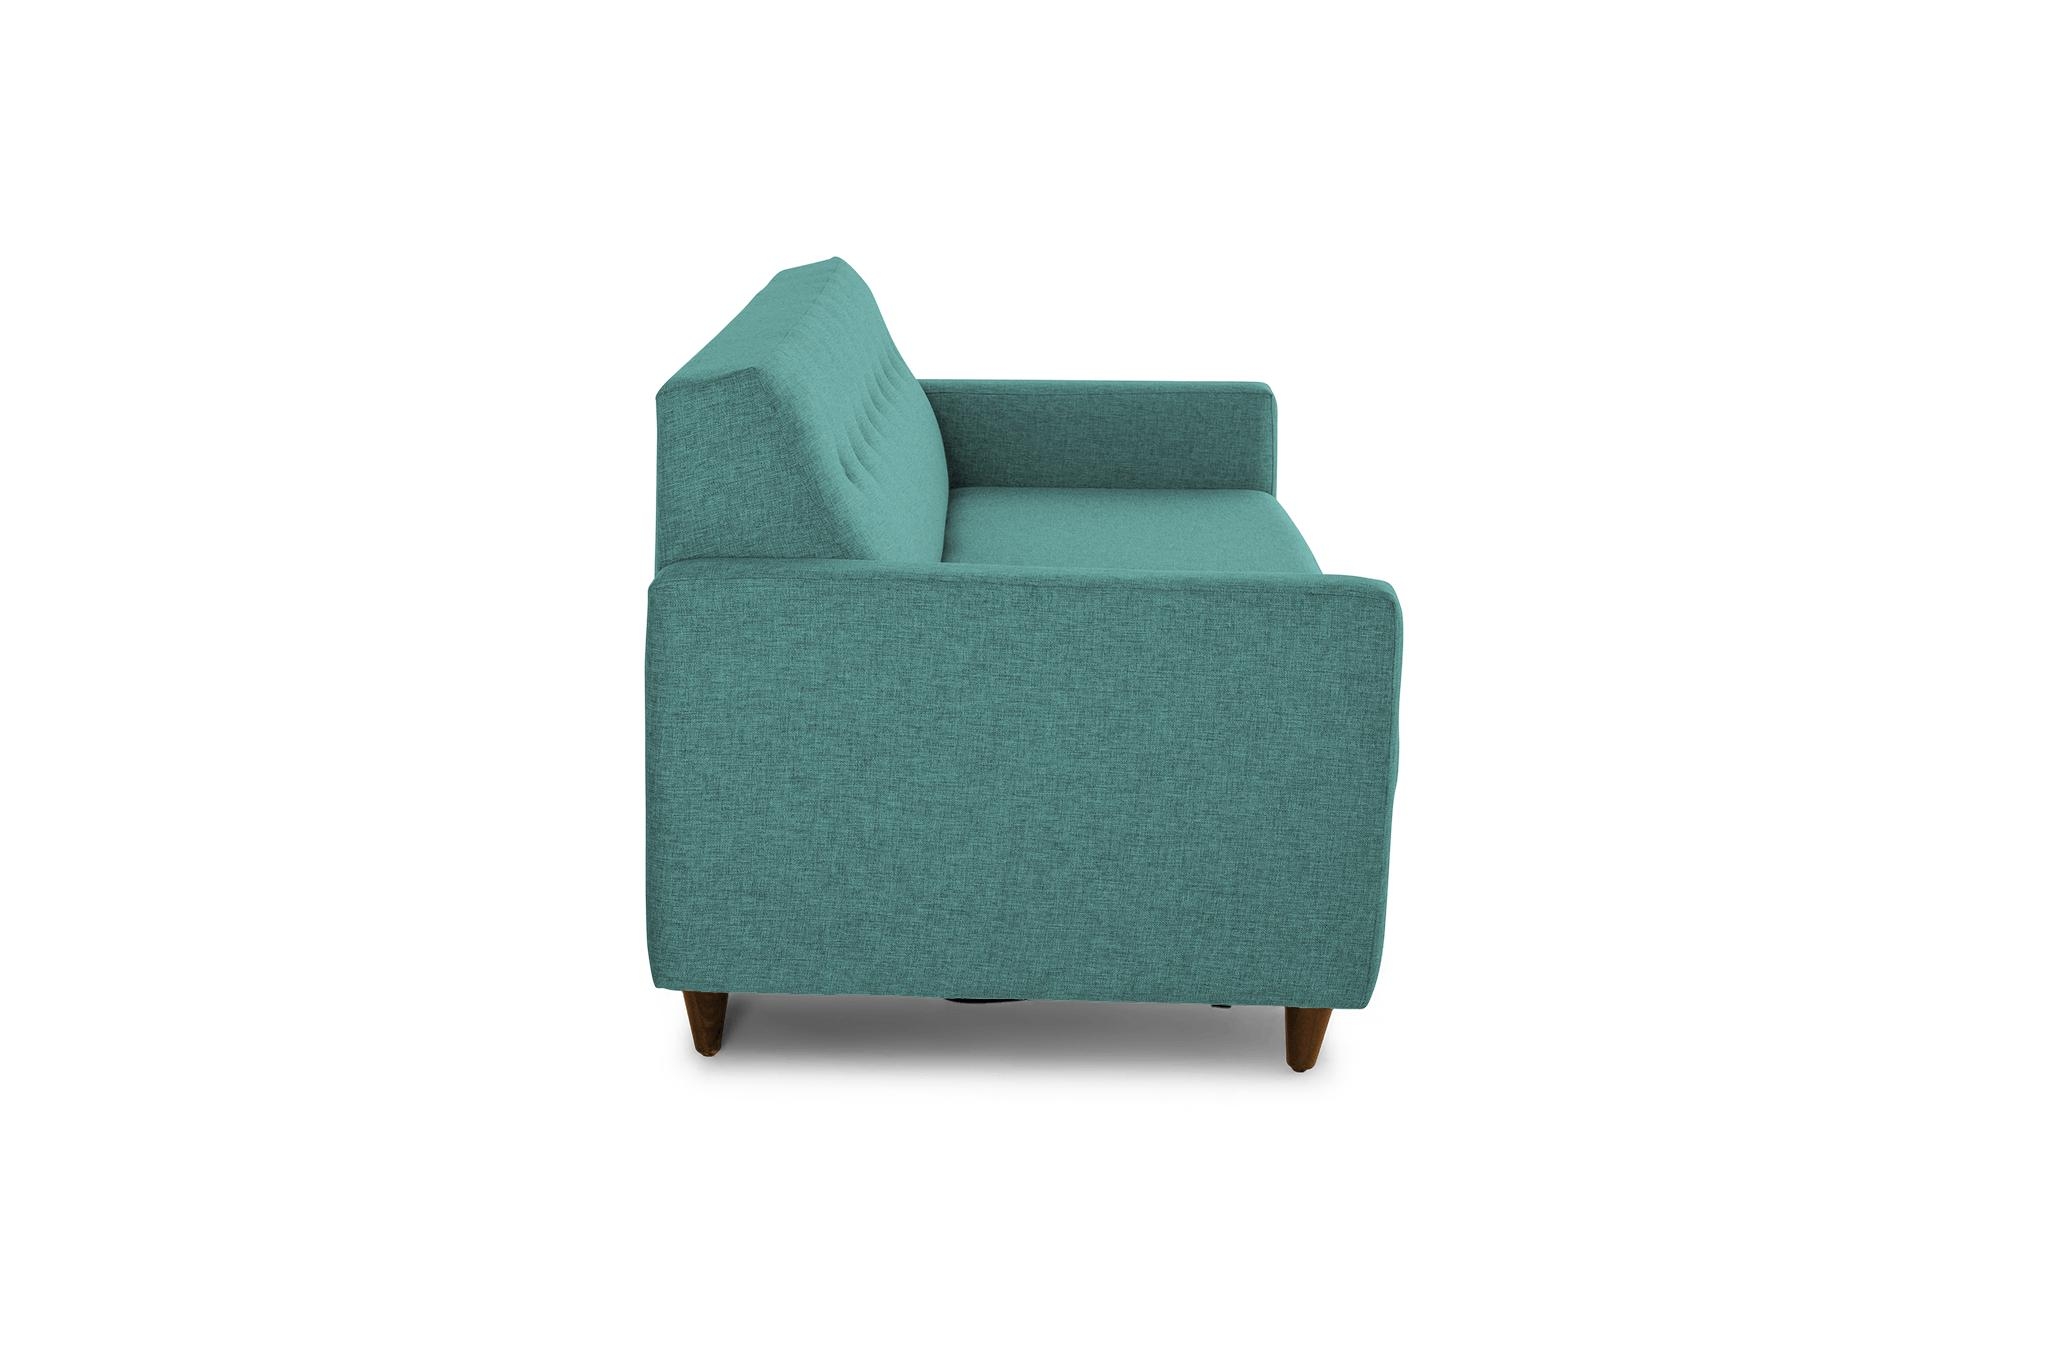 Green Korver Mid Century Modern Sleeper Sofa - Essence Aqua - Mocha - Image 3